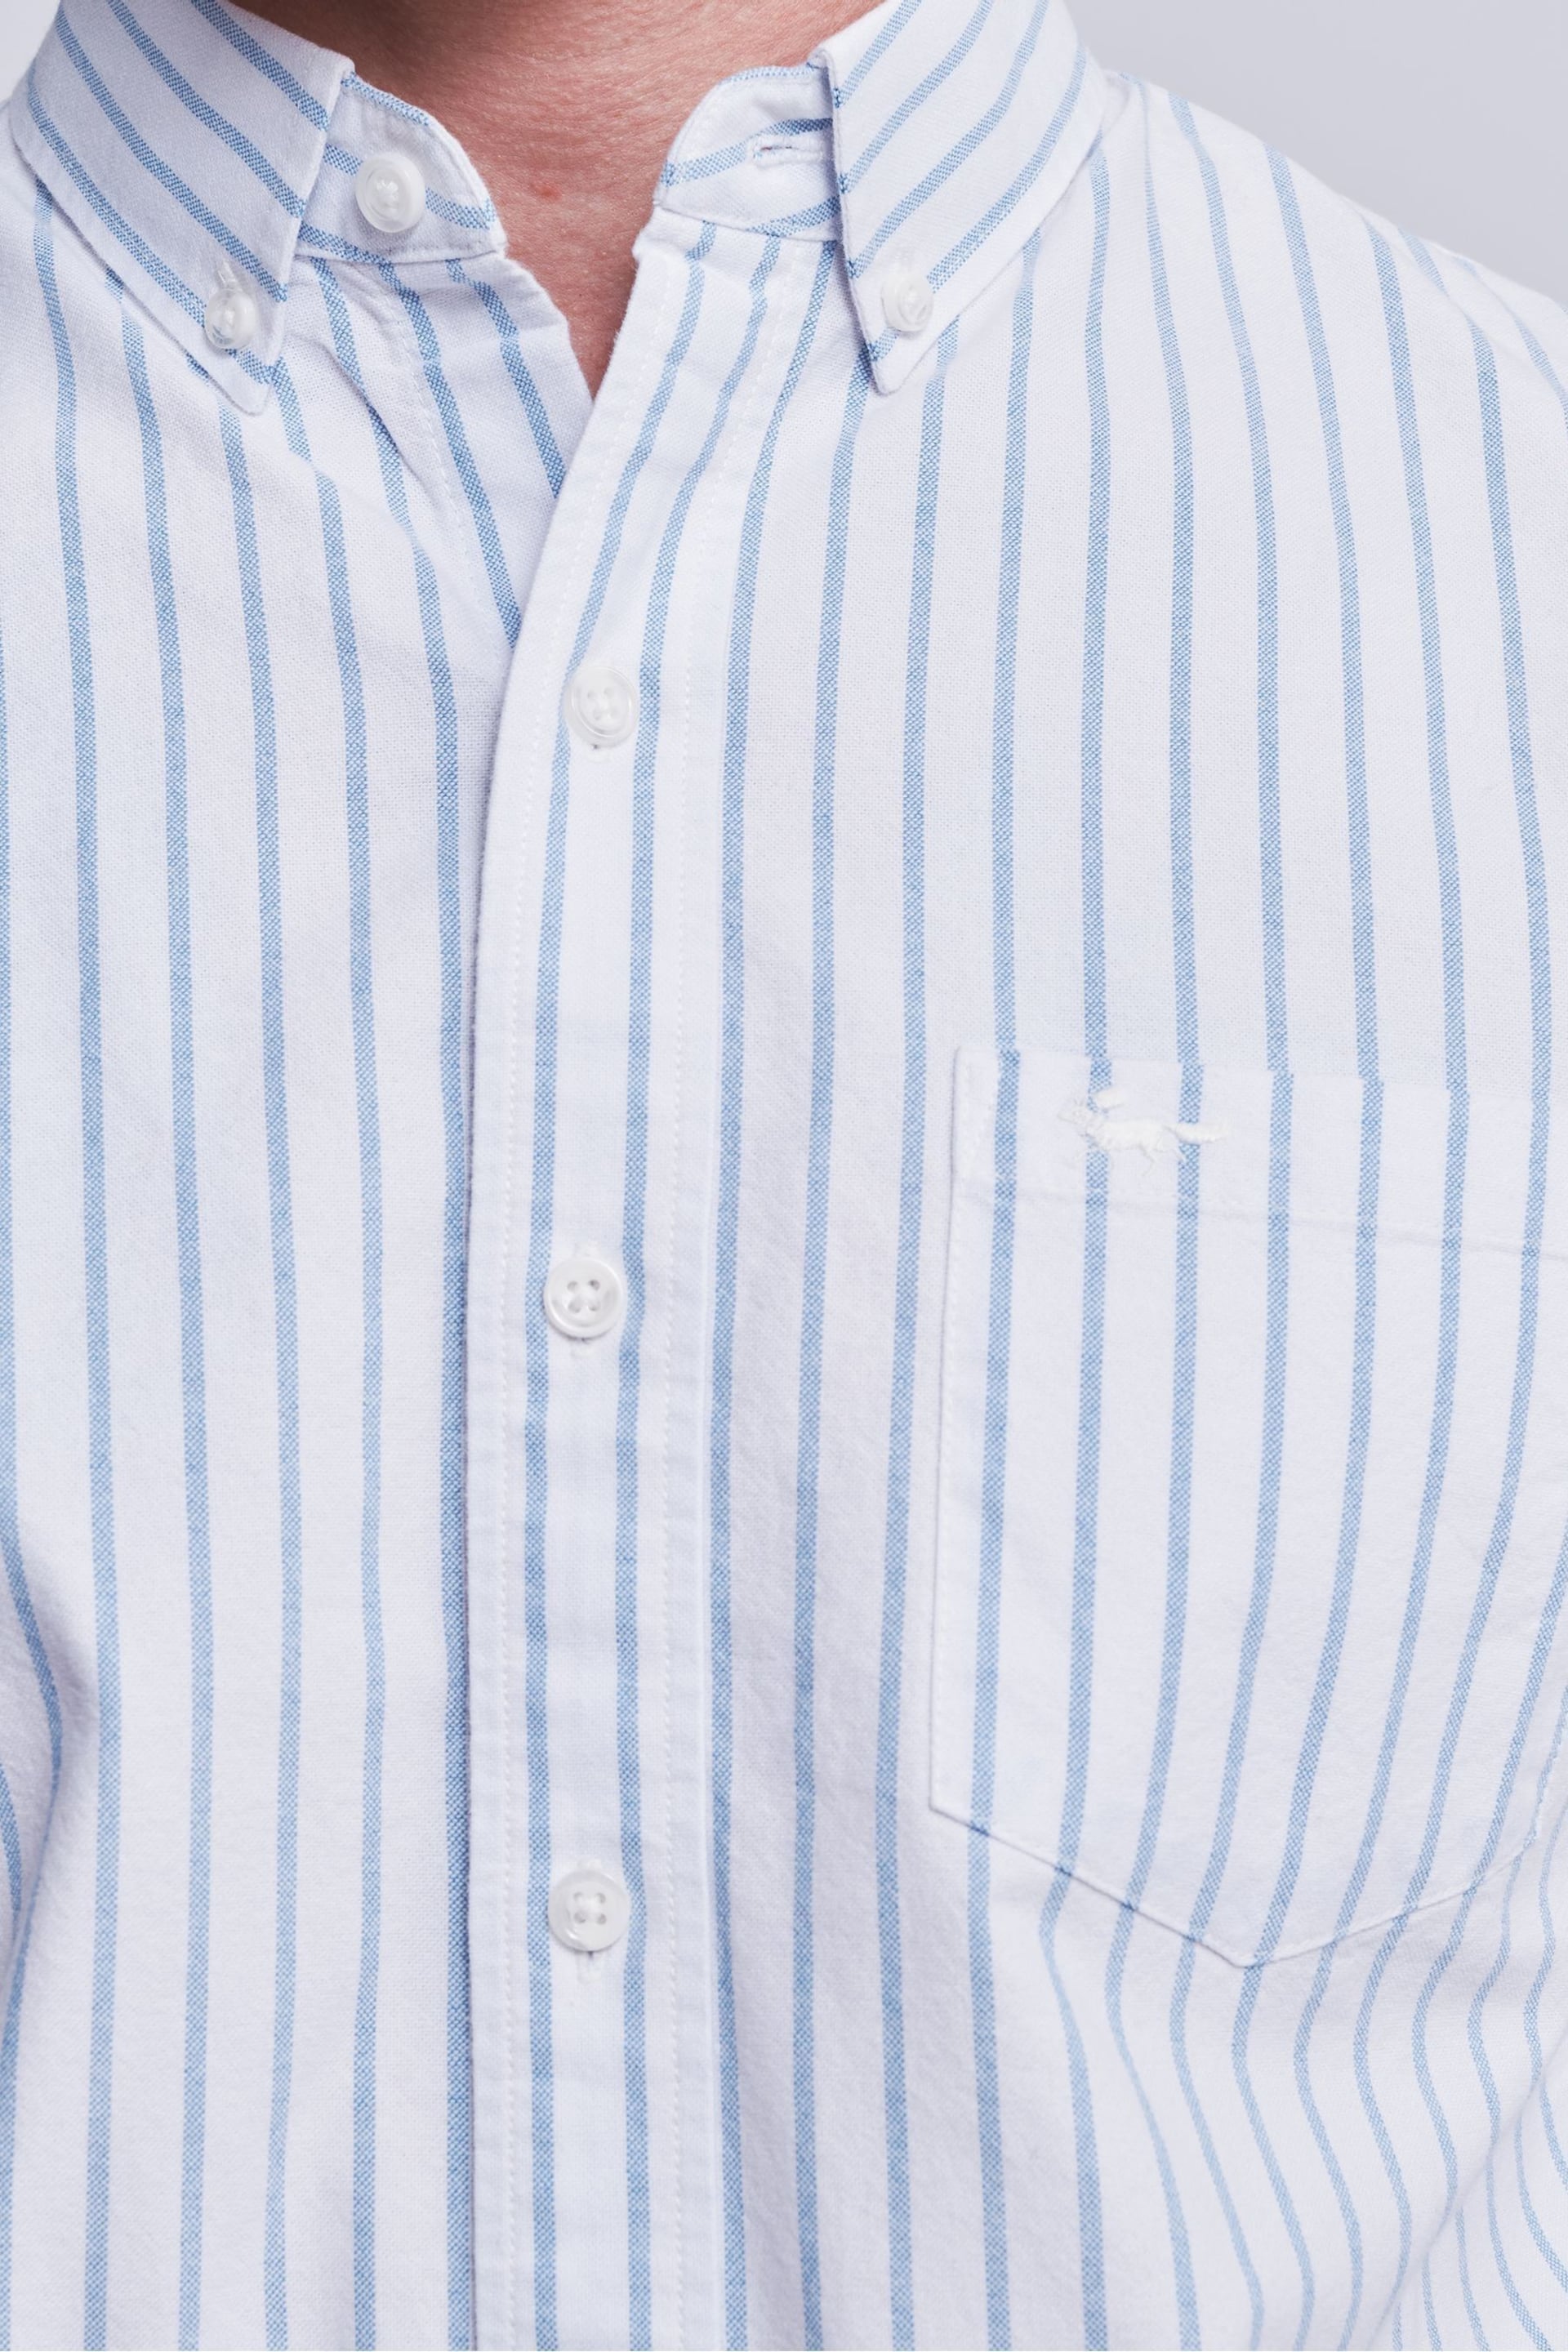 Aubin Aldridge Oxford Button Down Shirt - Image 4 of 8